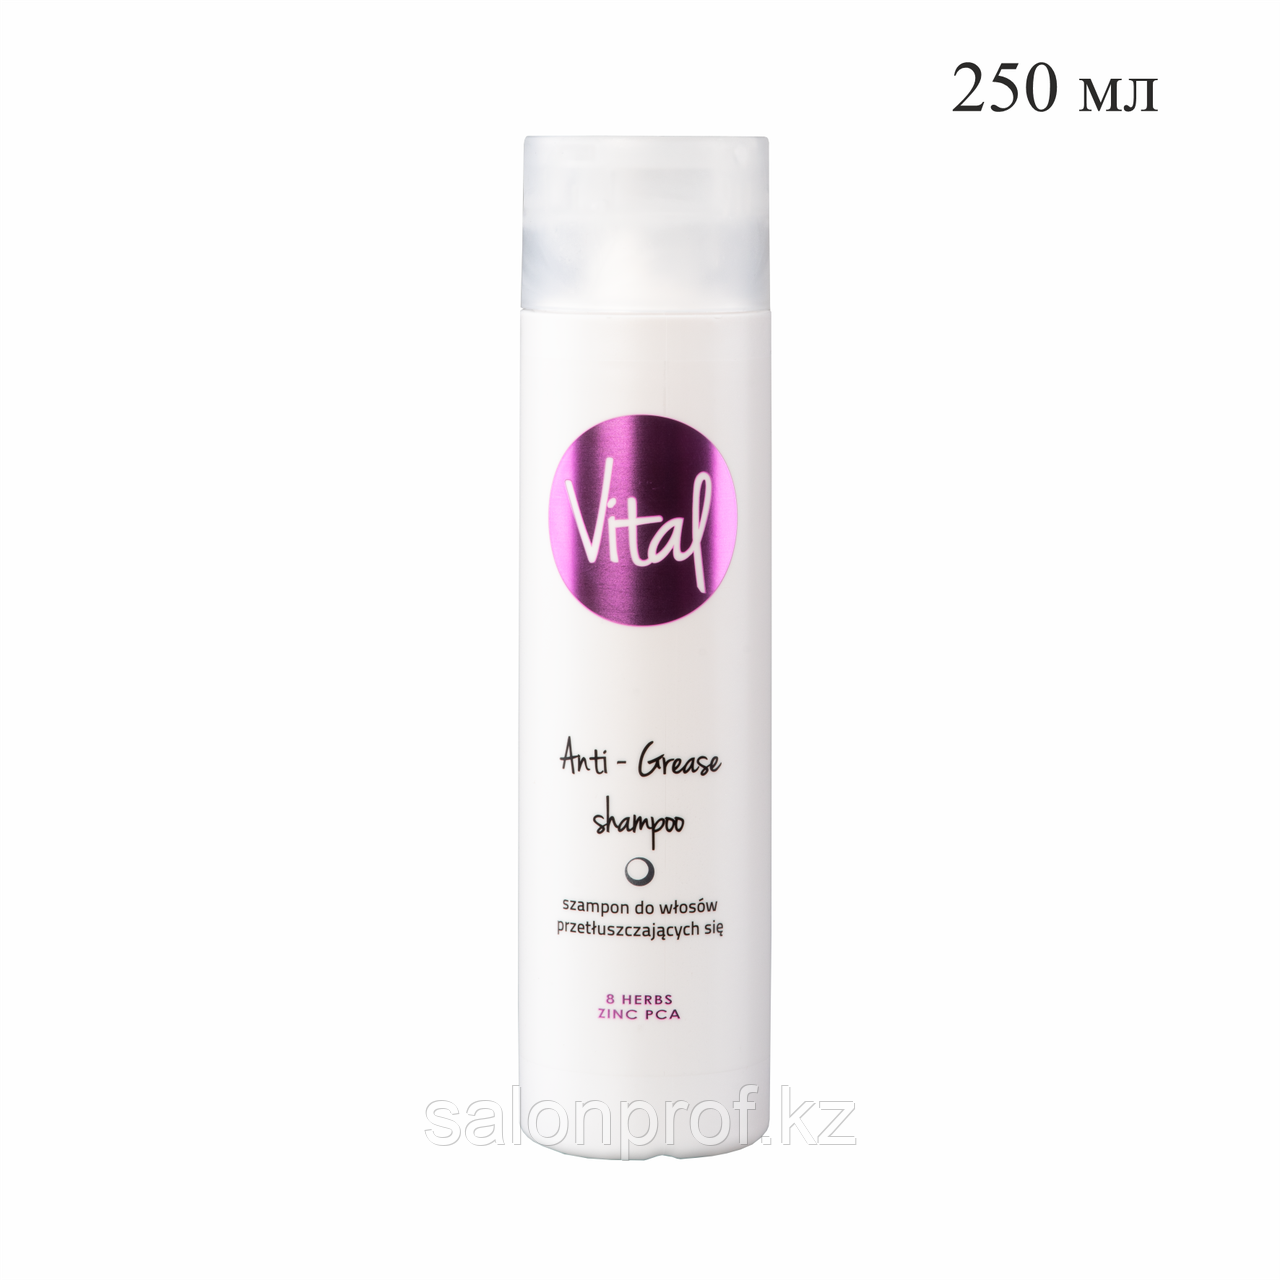 Шампунь для жирных волос VITAL ANTI-GREASE 250 мл №36030